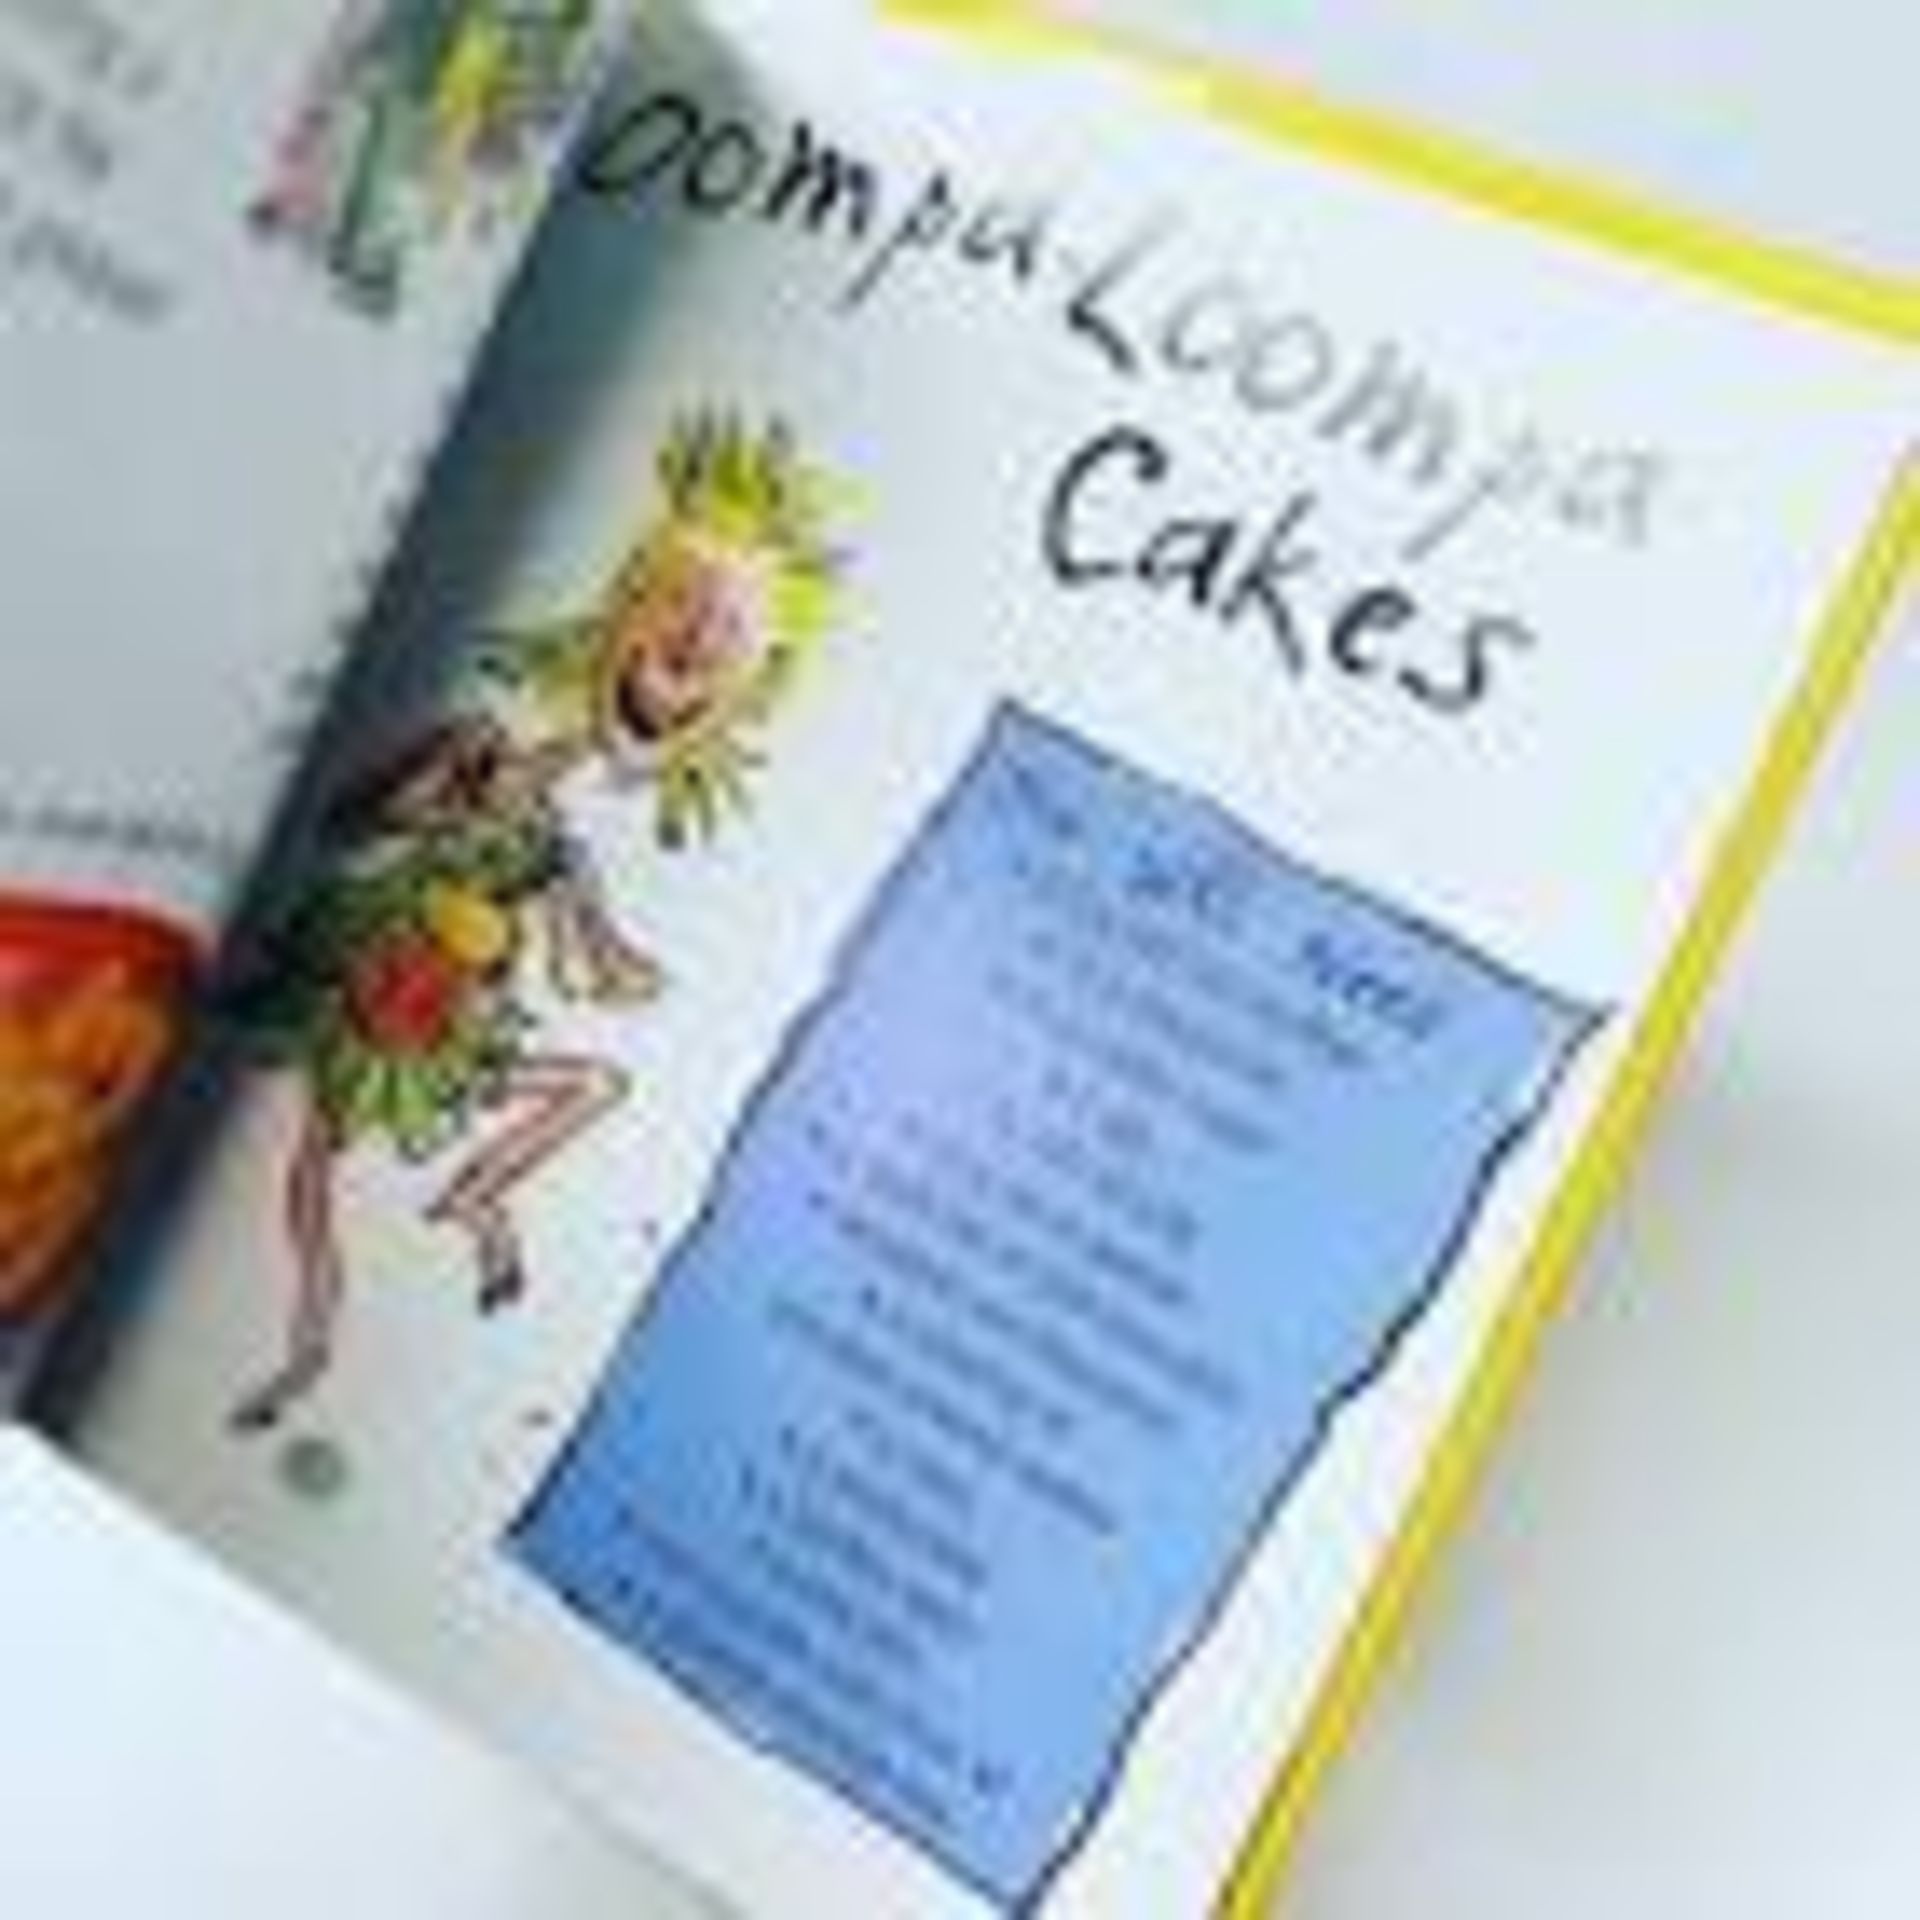 100 x Roald Dahl Grobswitchy Grumb Cupcake Making Kit - Image 3 of 4